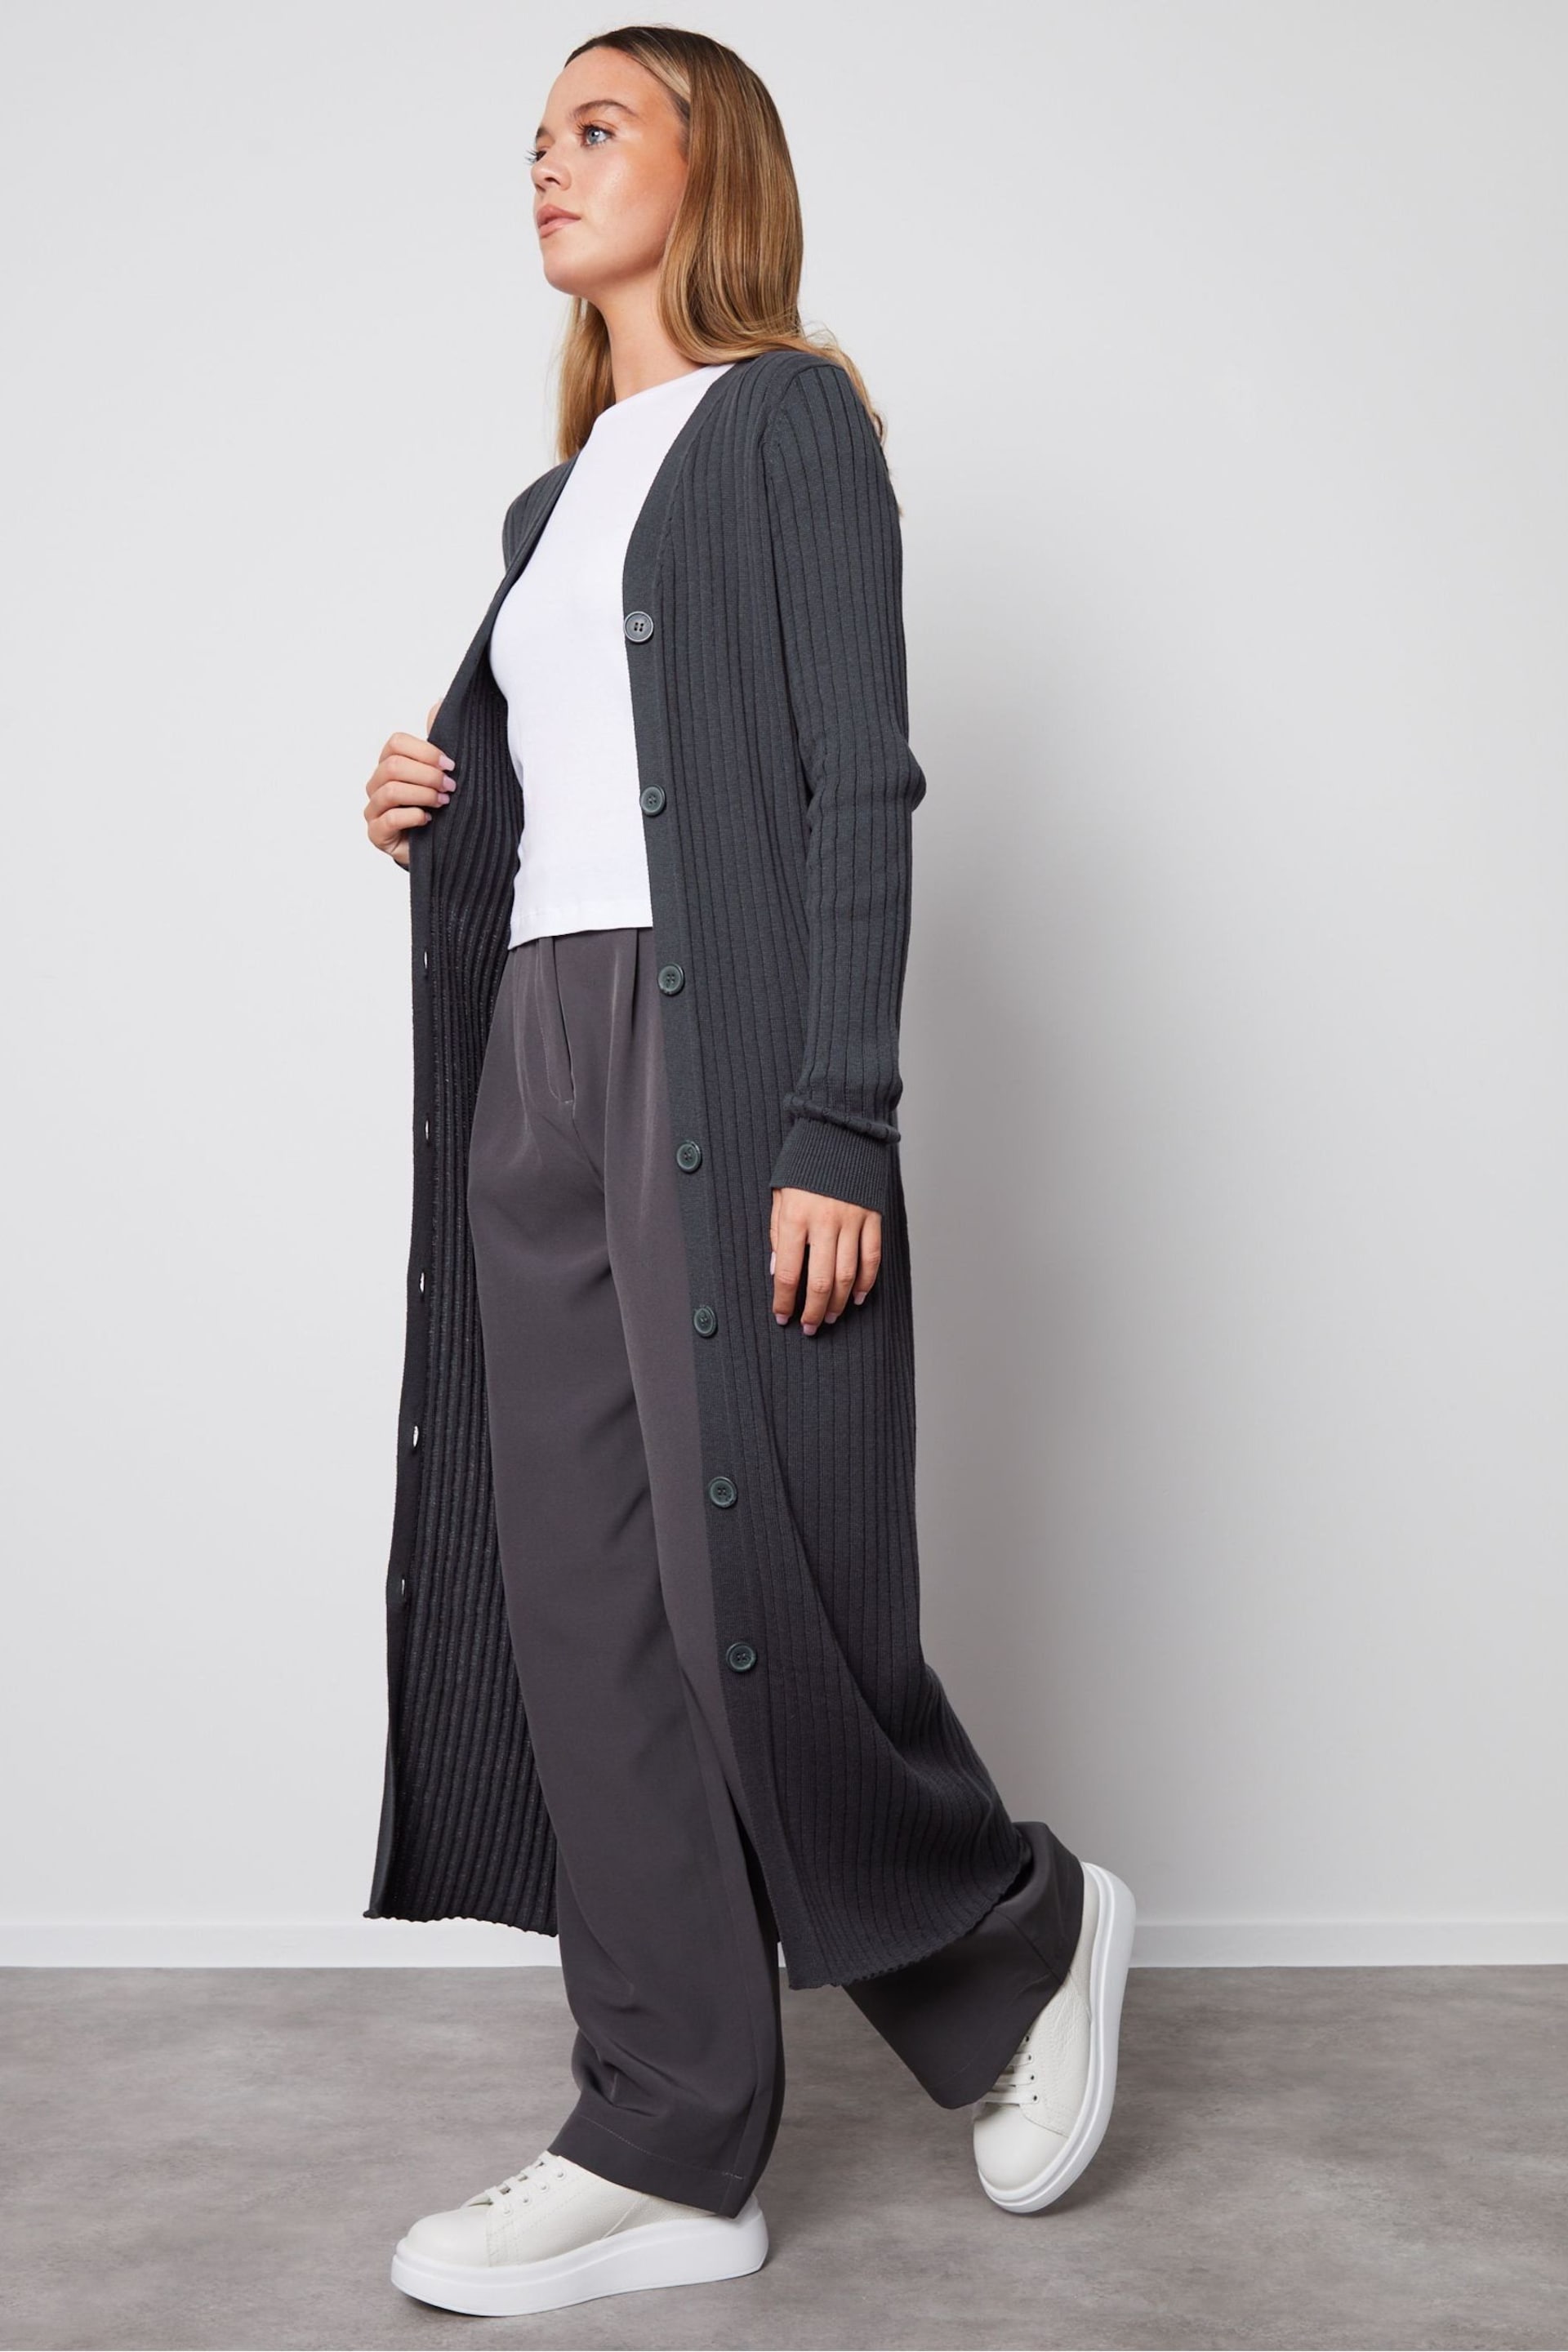 Threadbare Grey Cardigan Style Knitted Midi Dress - Image 1 of 5